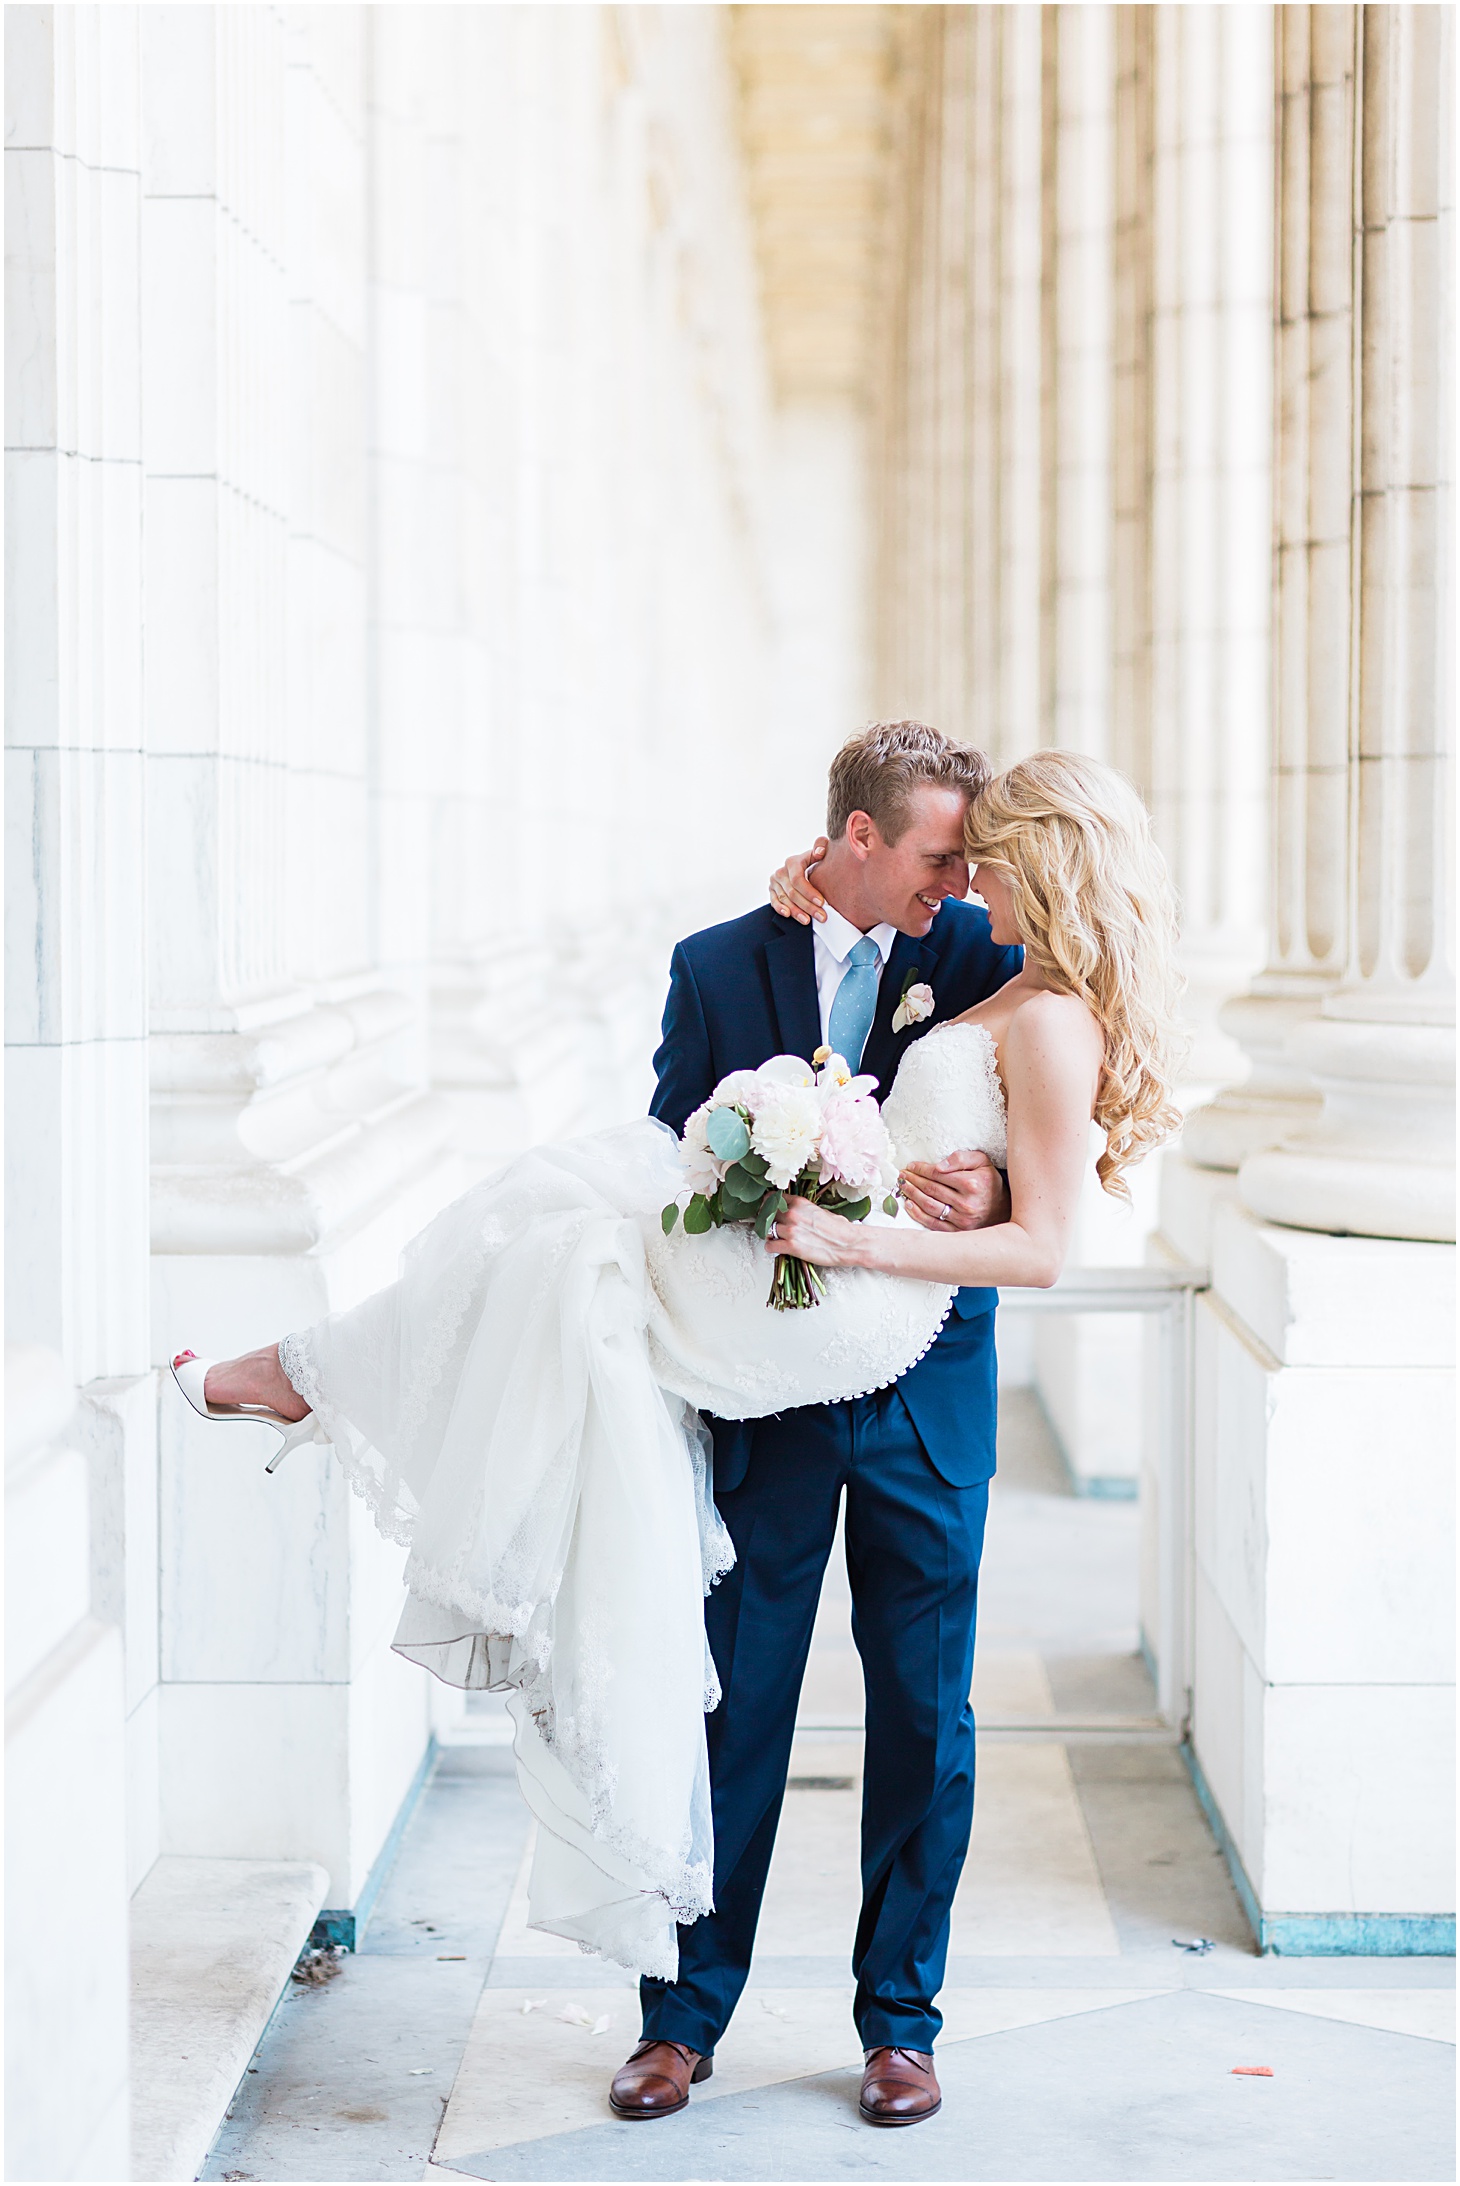 Russell Senate Office Building Wedding | Top Washington DC wedding photographer Sarah Bradshaw